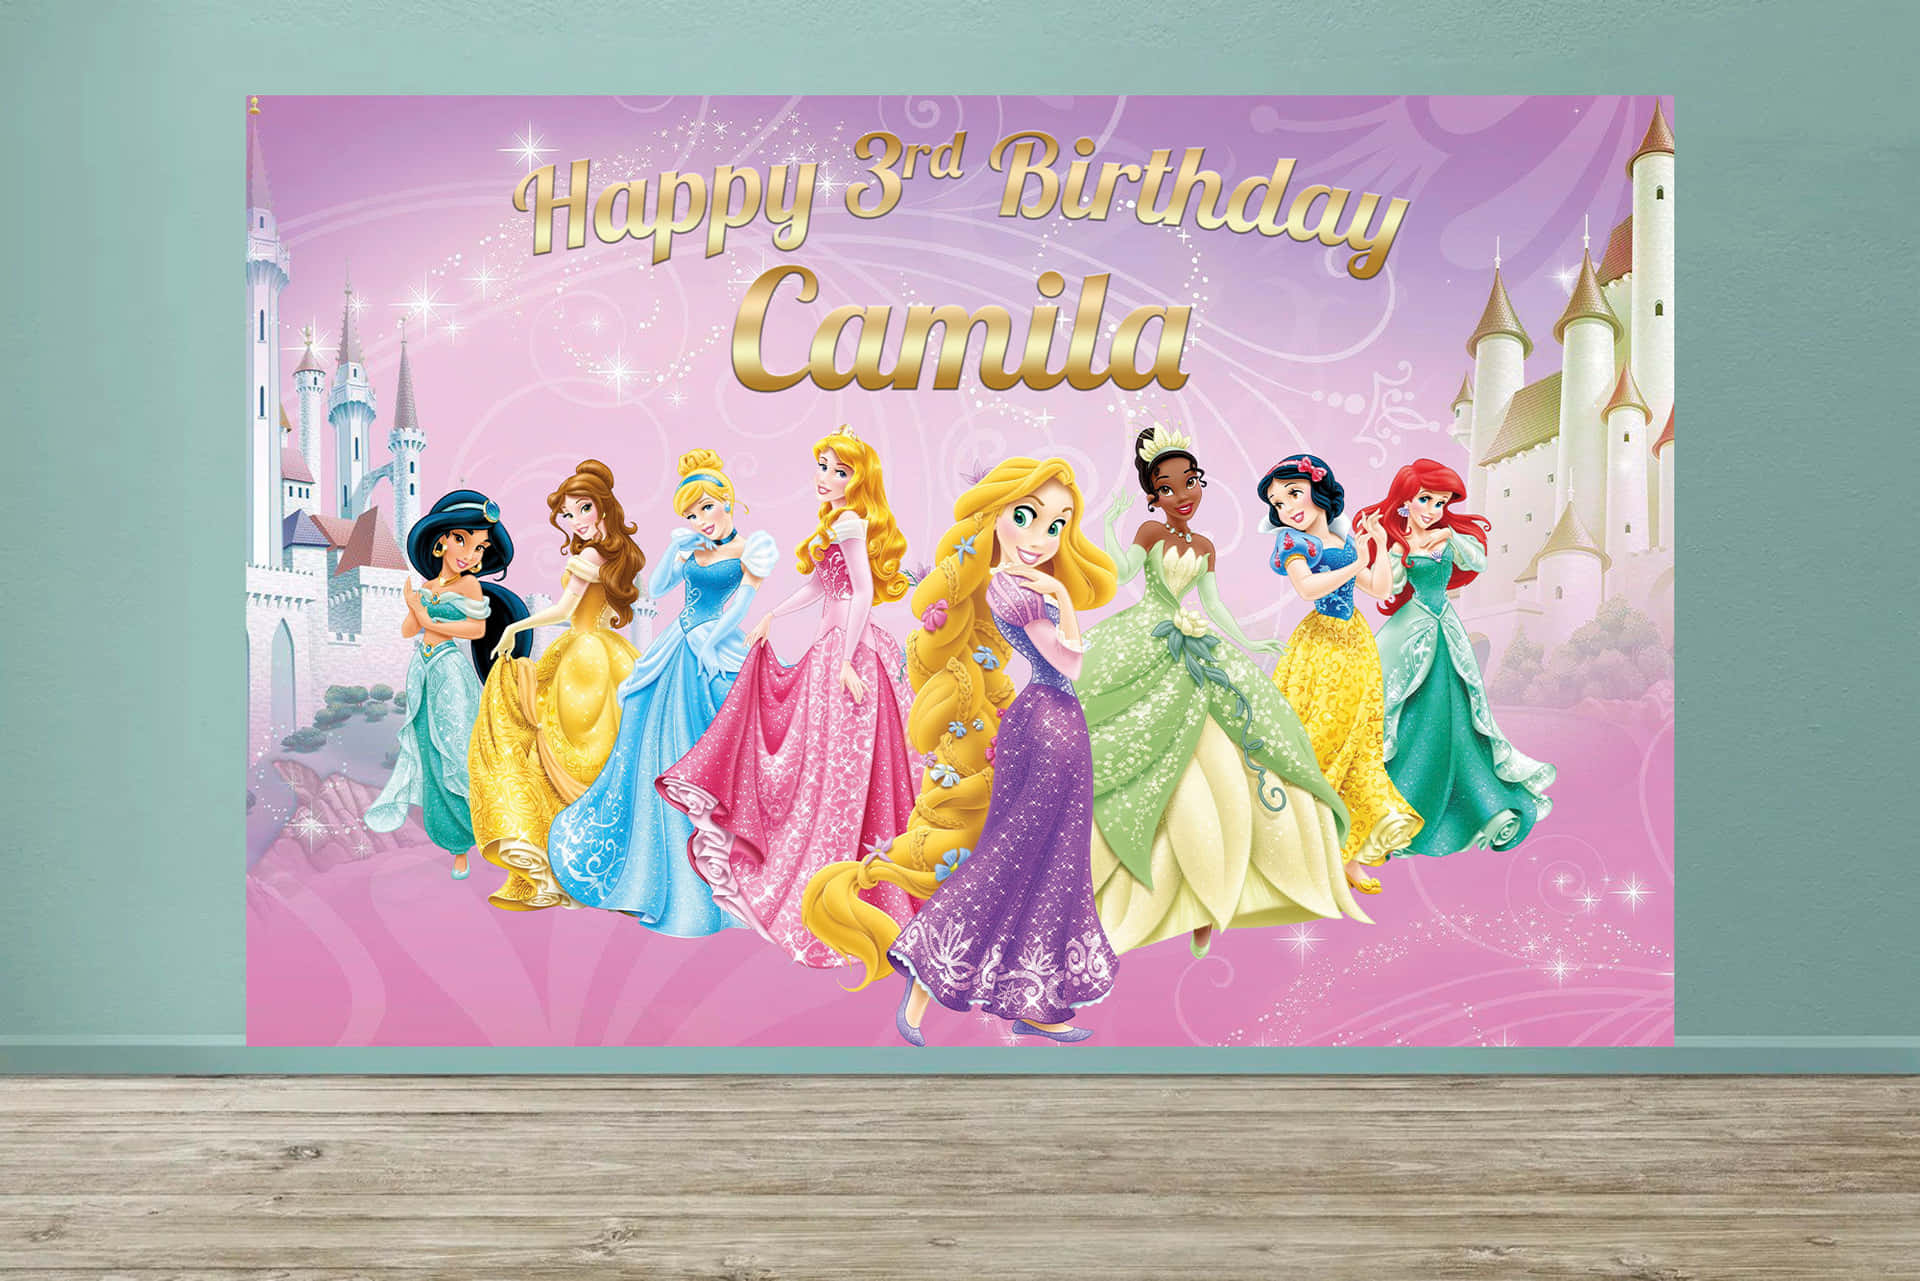 A Magical Gathering Of Disney Princesses